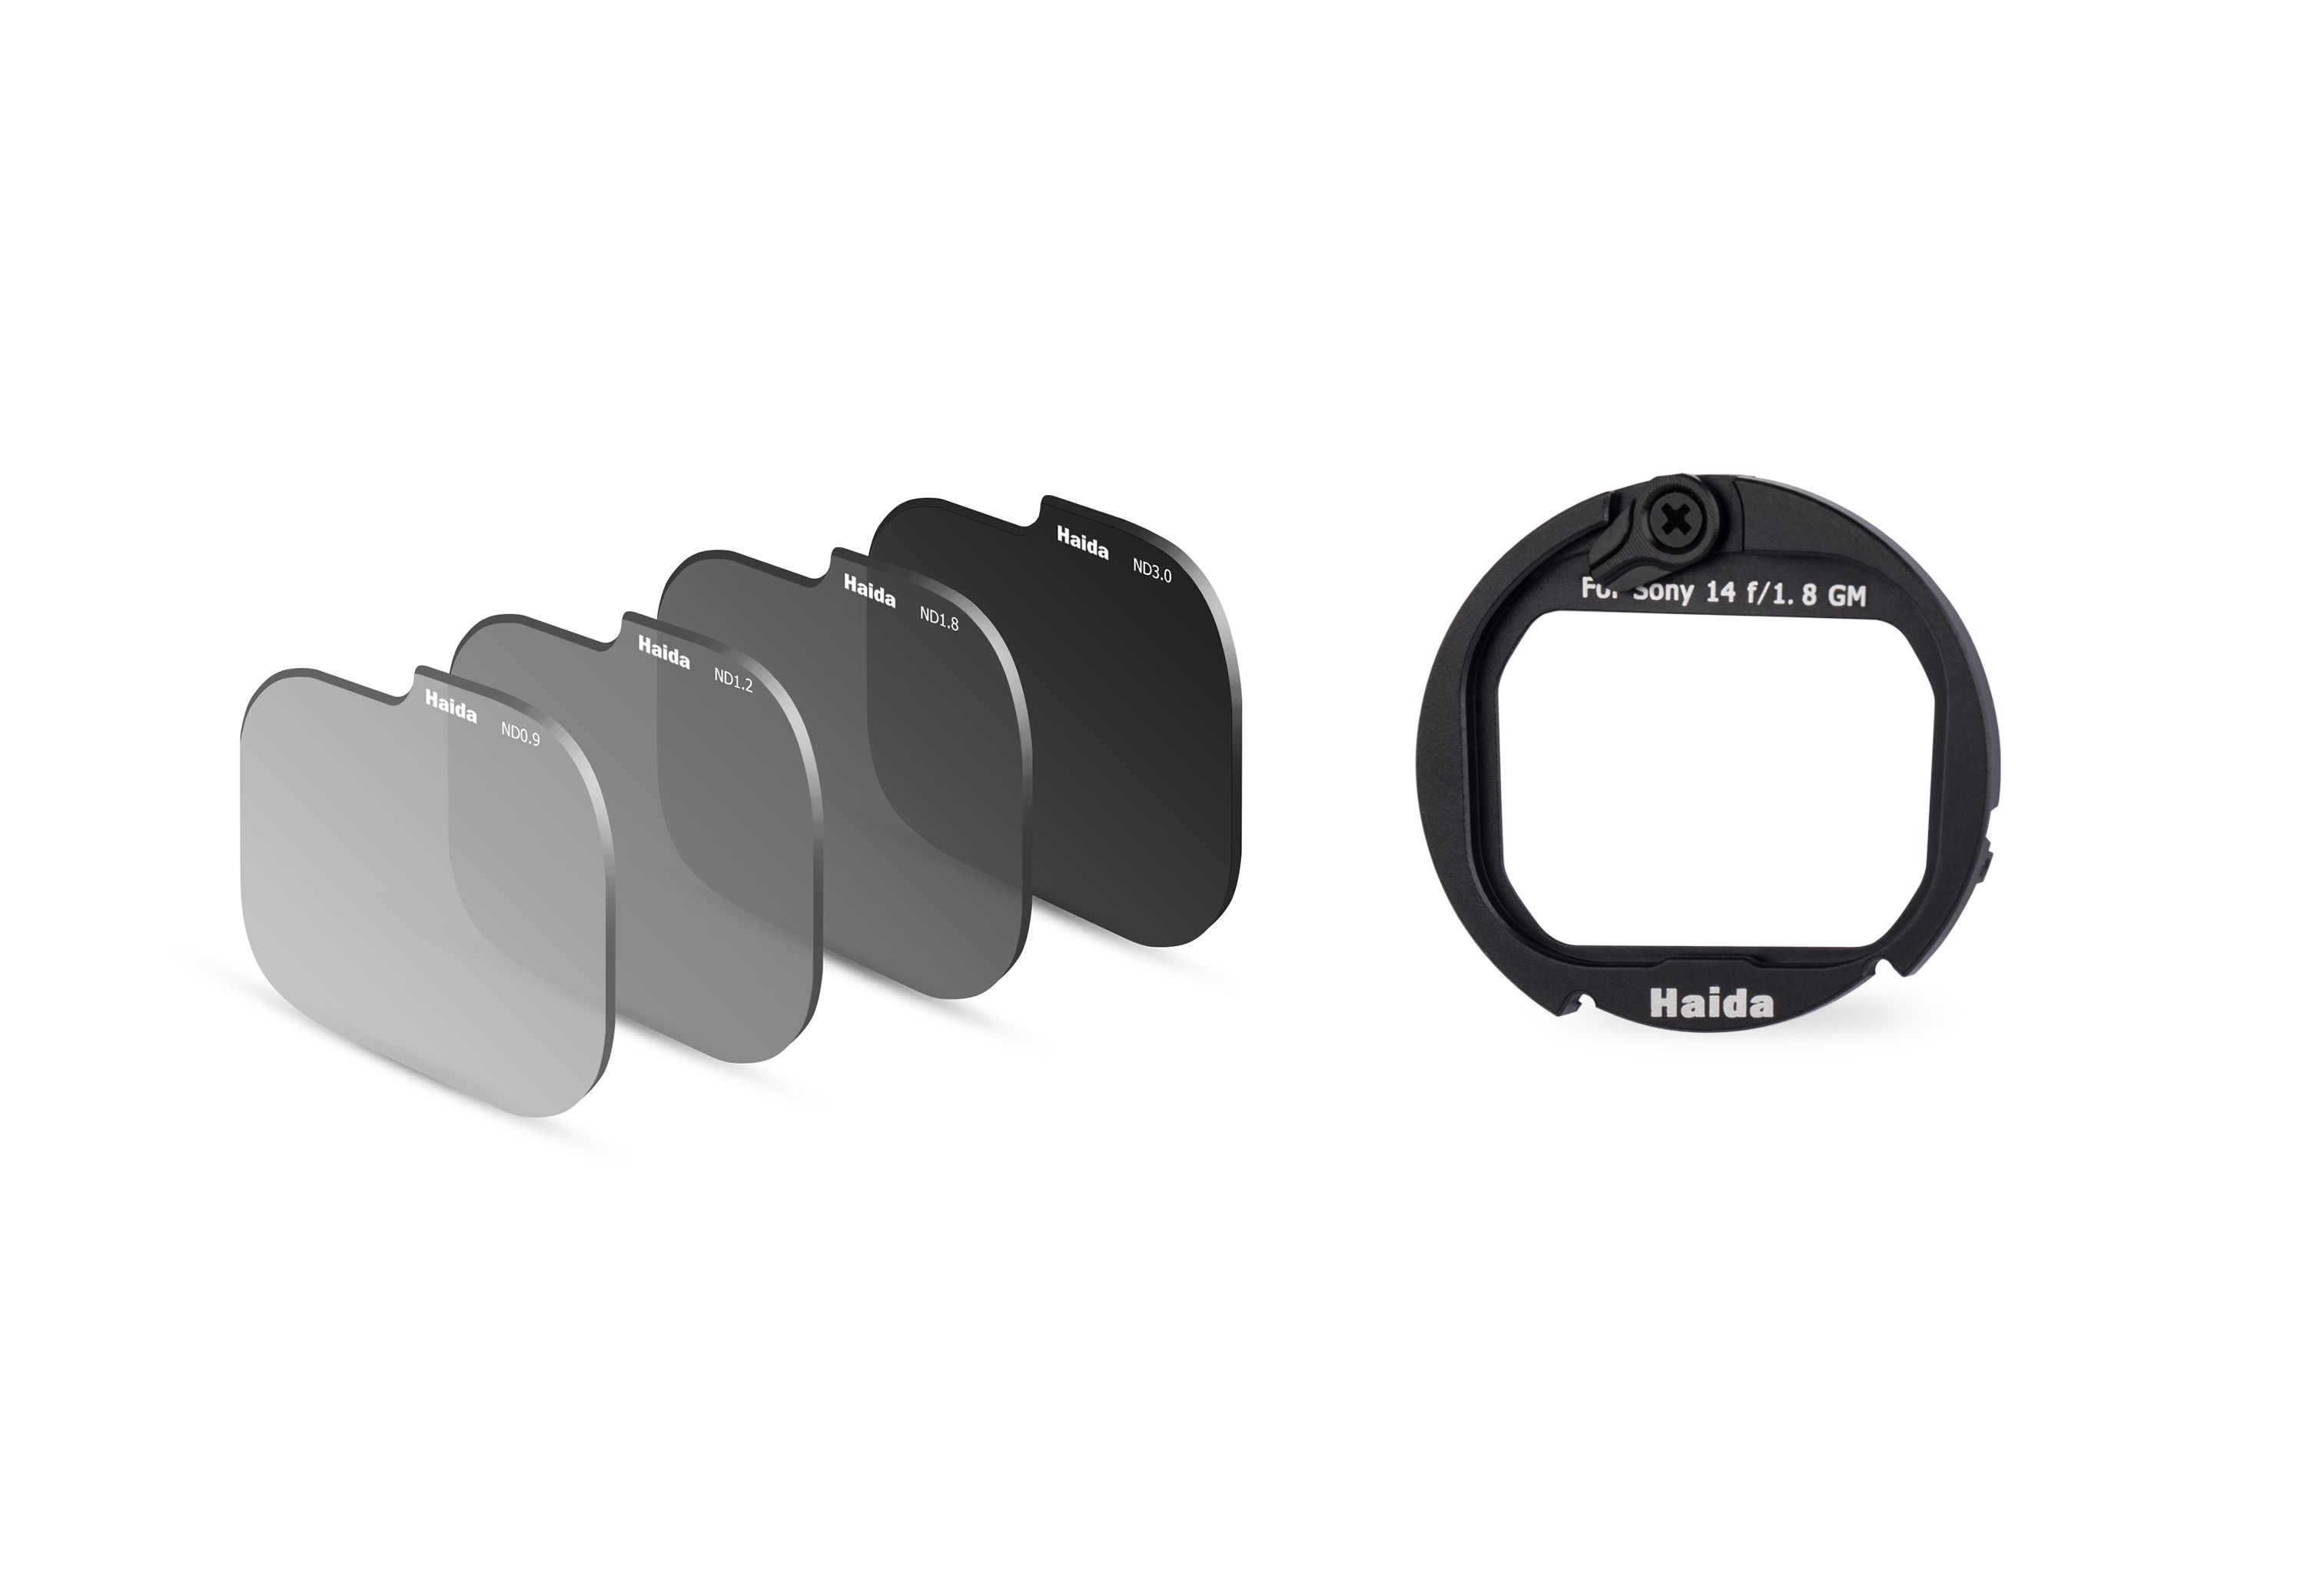 Haida Rear ND Filter Kit for Sigma, Nikon, Tamron, Canon and Sony lens